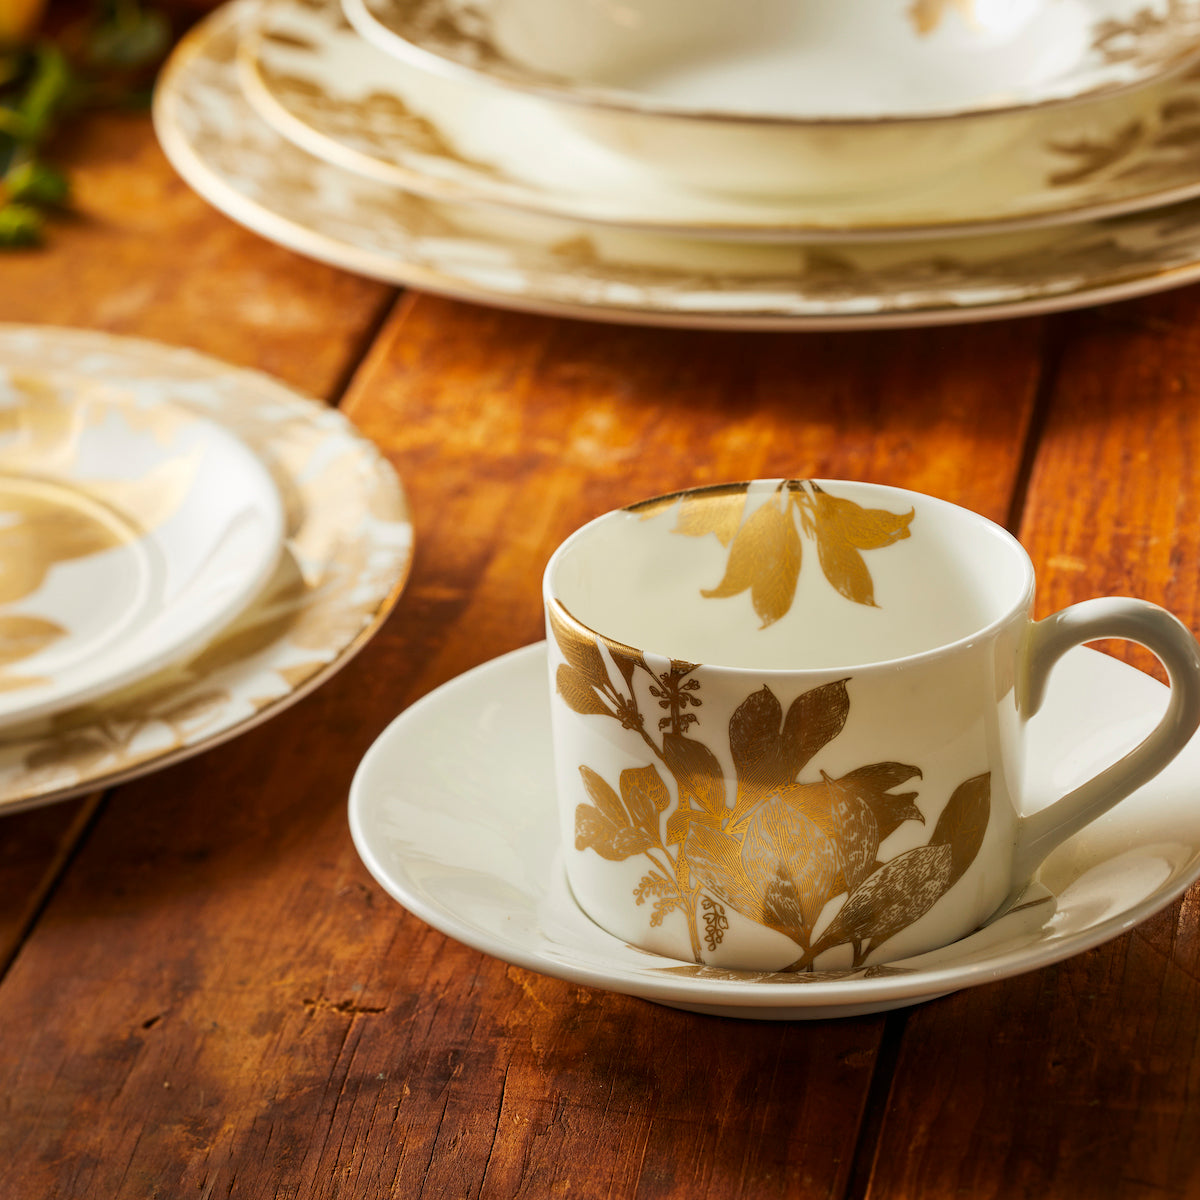 Arbor Gold bone china Teacup and Saucer from Caskata.